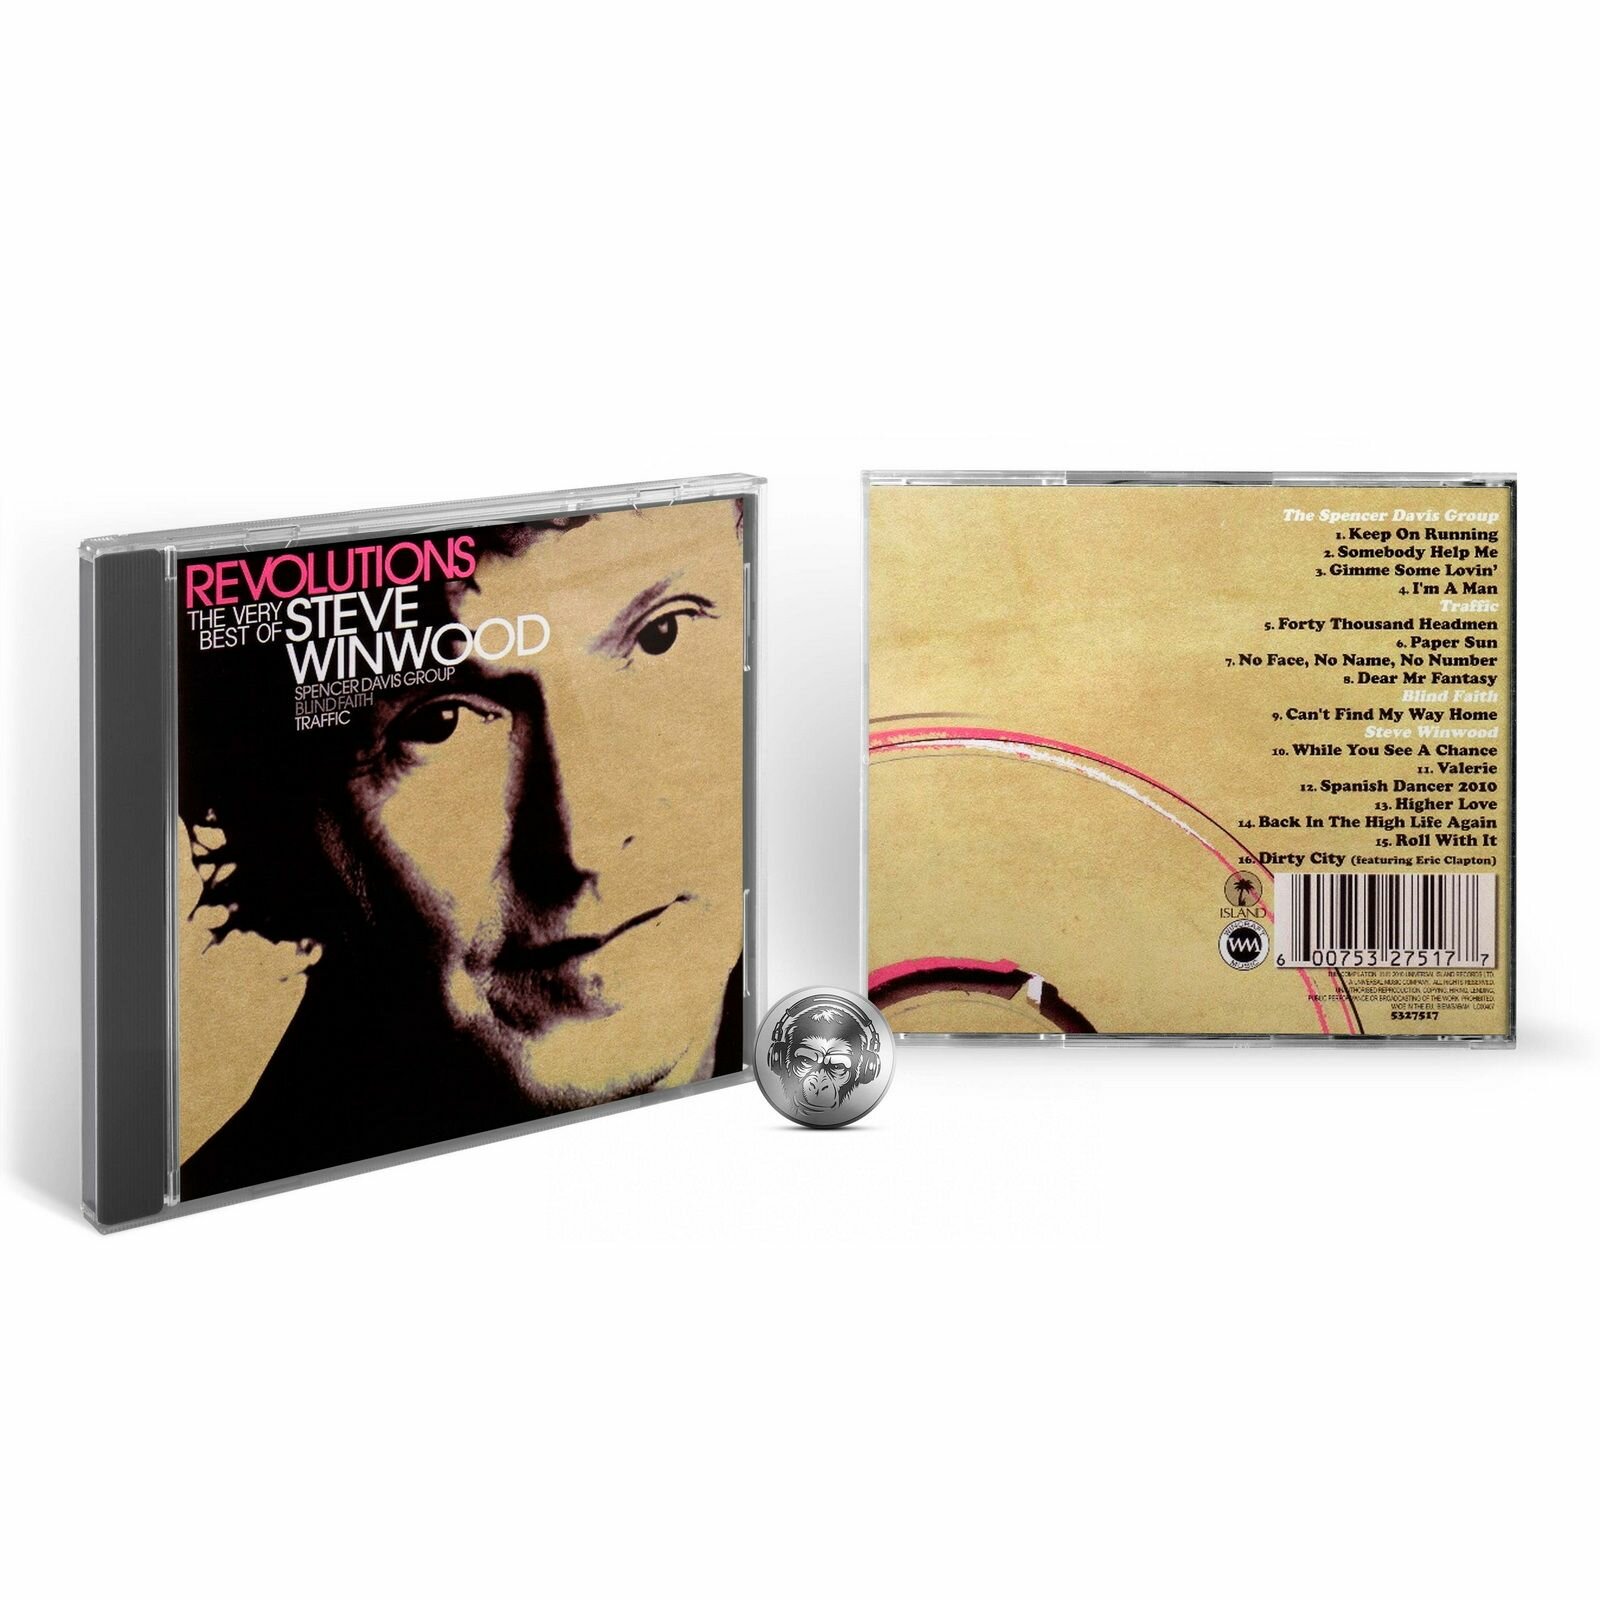 Steve Winwood - Revolutions: The Very Best Of (1CD) 2010 Universal, Jewel Аудио диск